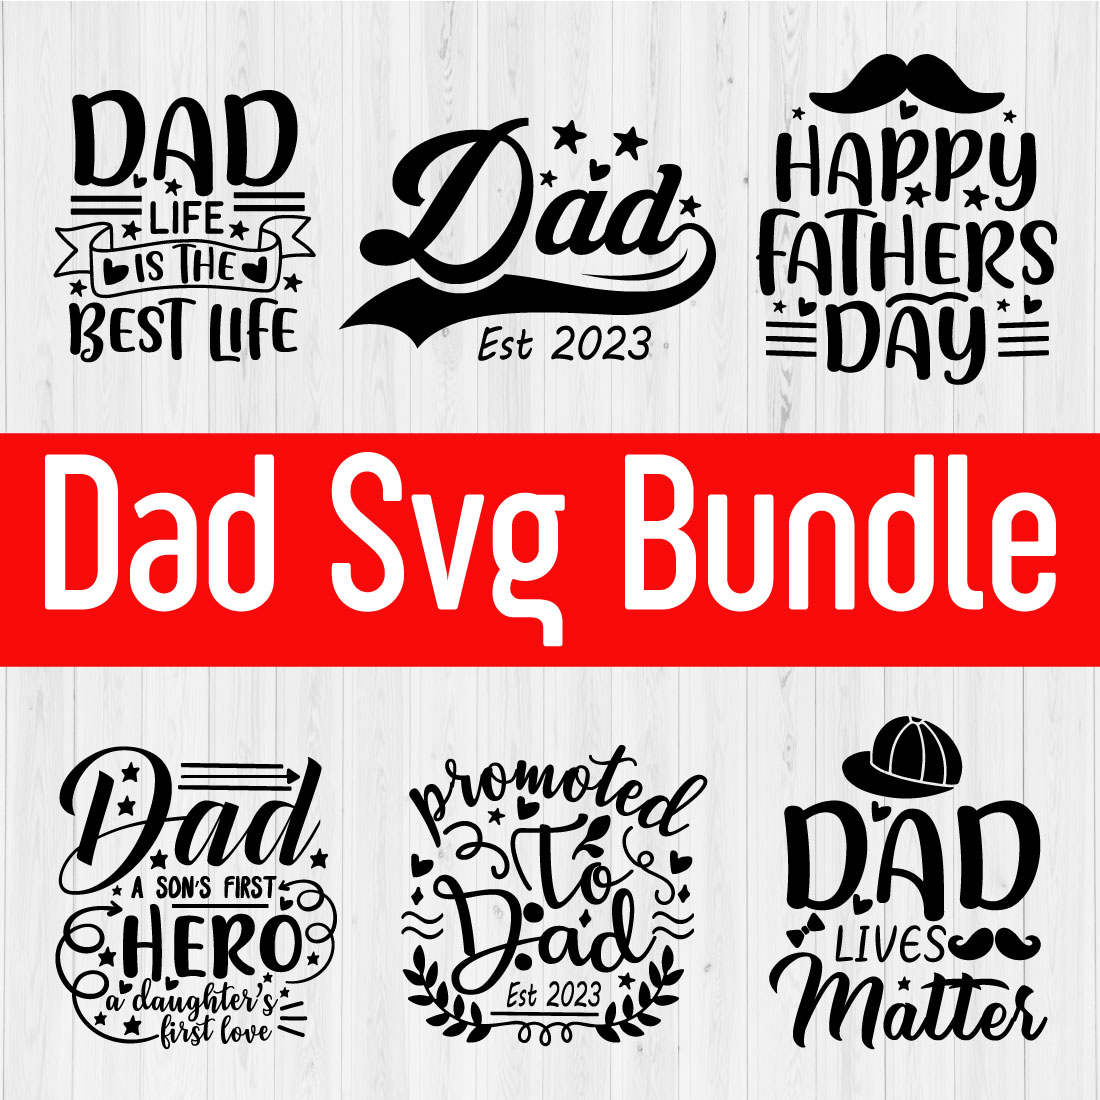 Dad Svg Bundle Vol4 cover image.